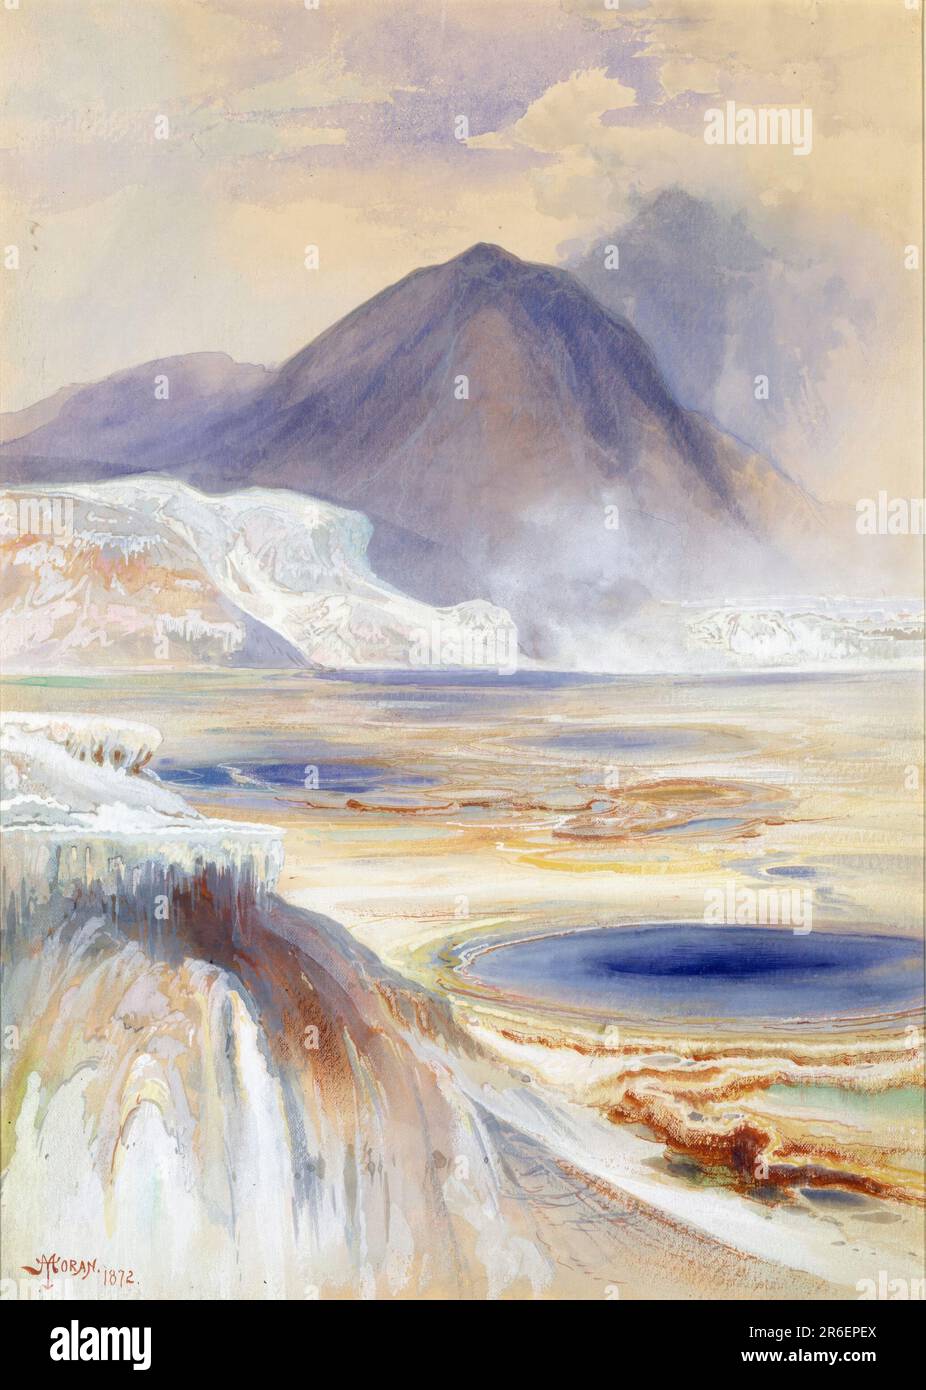 Mammoth Hot Springs, Yellowstone. aquarelle et crayon sur papier. Date: 1872. Musée: Smithsonian American Art Museum. Banque D'Images